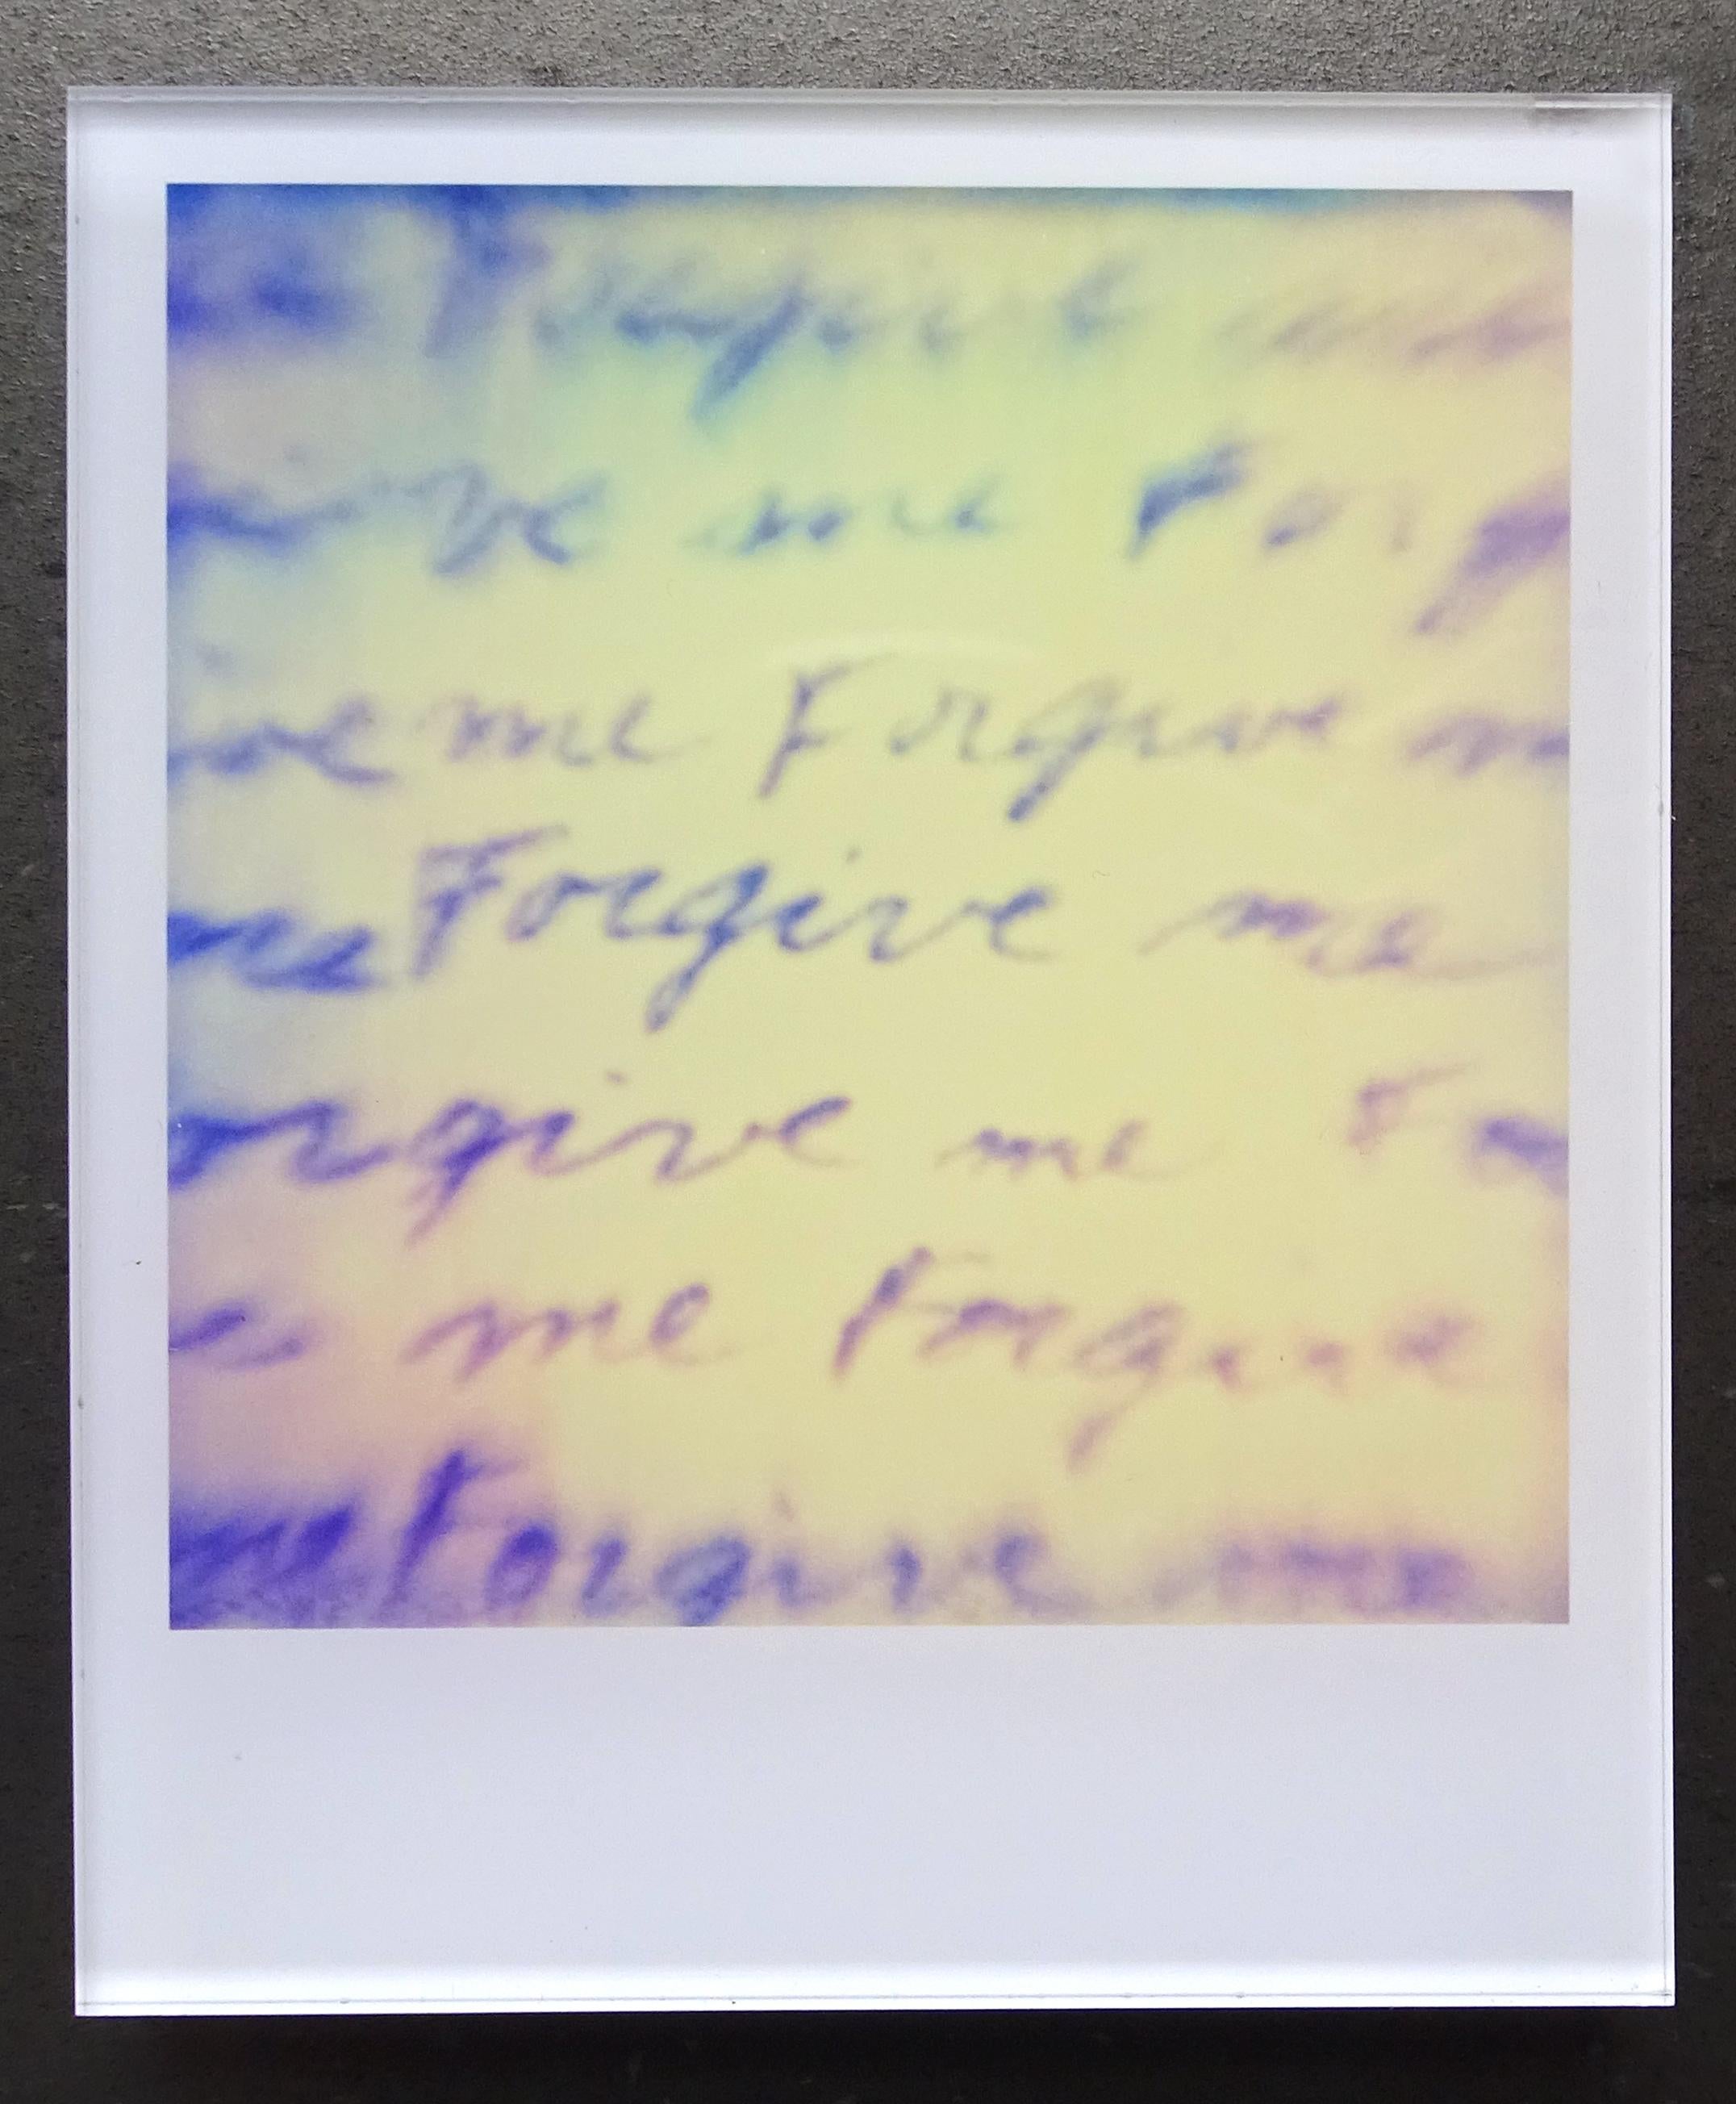 Stefanie Schneider Minis - Forgive Me (Stay) - based on a Polaroid